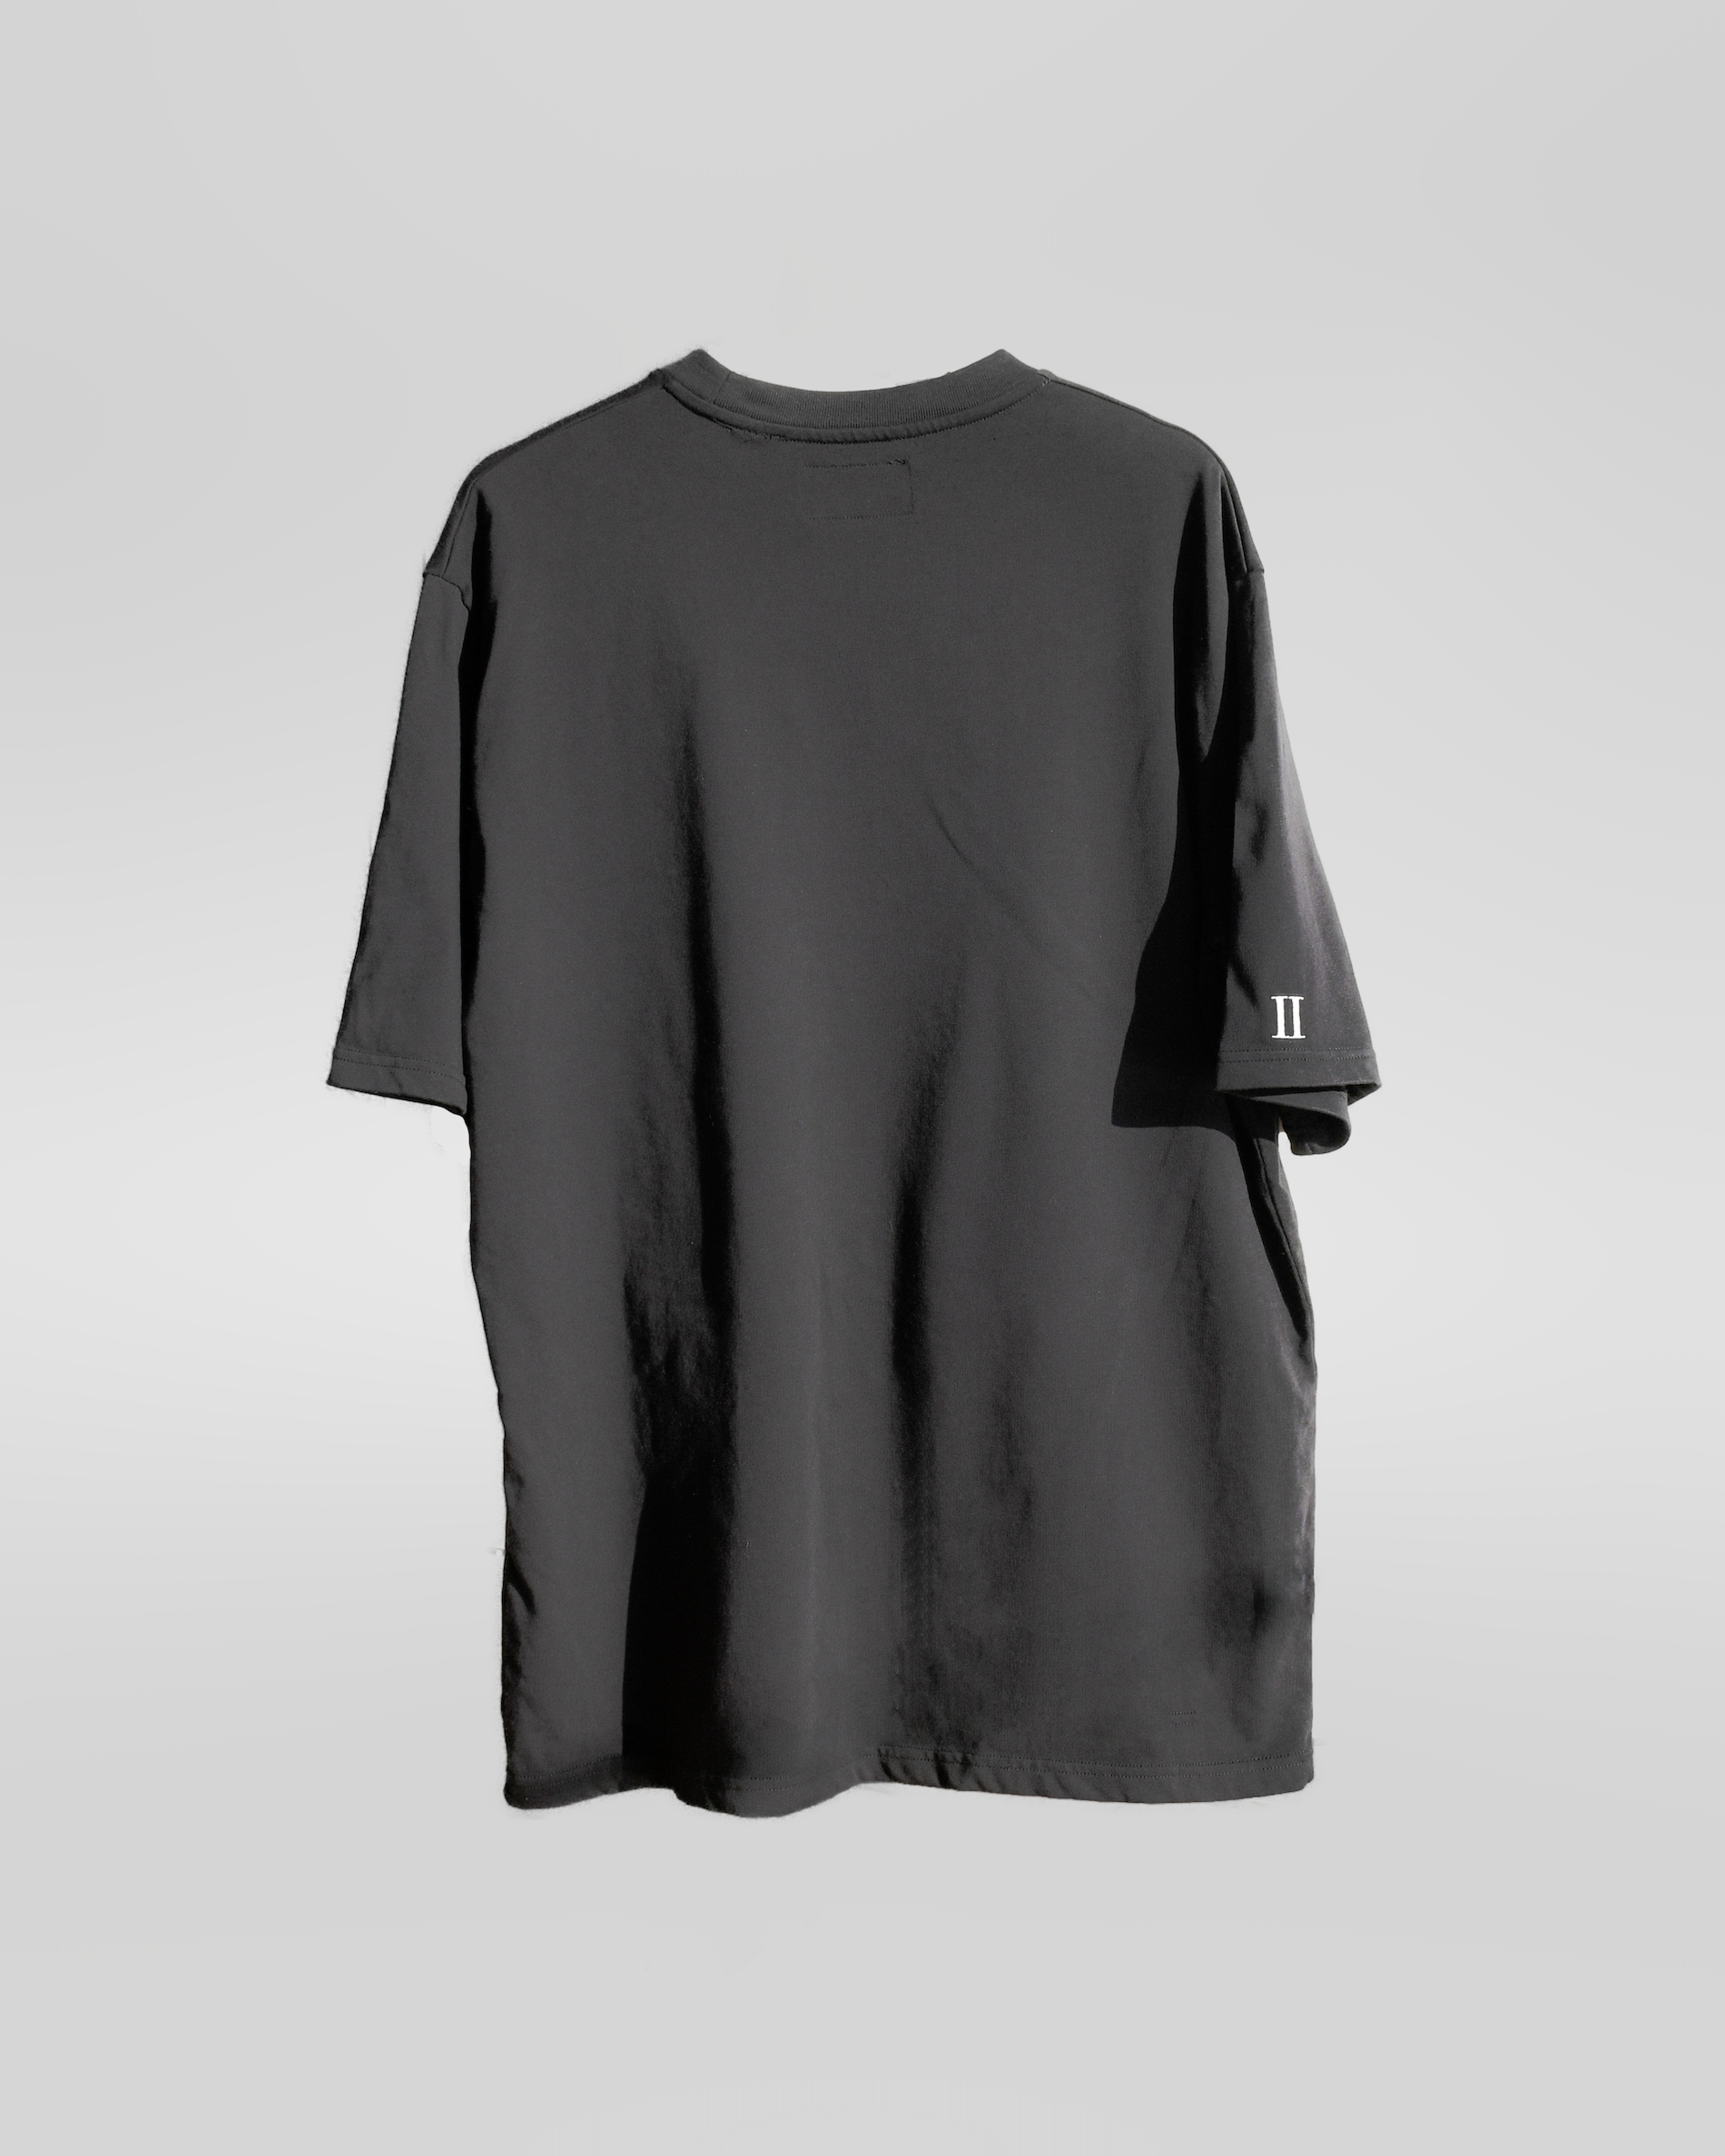 2FRATELLI Oversized front print T-Shirt black (unisex) - 2FRATELLI